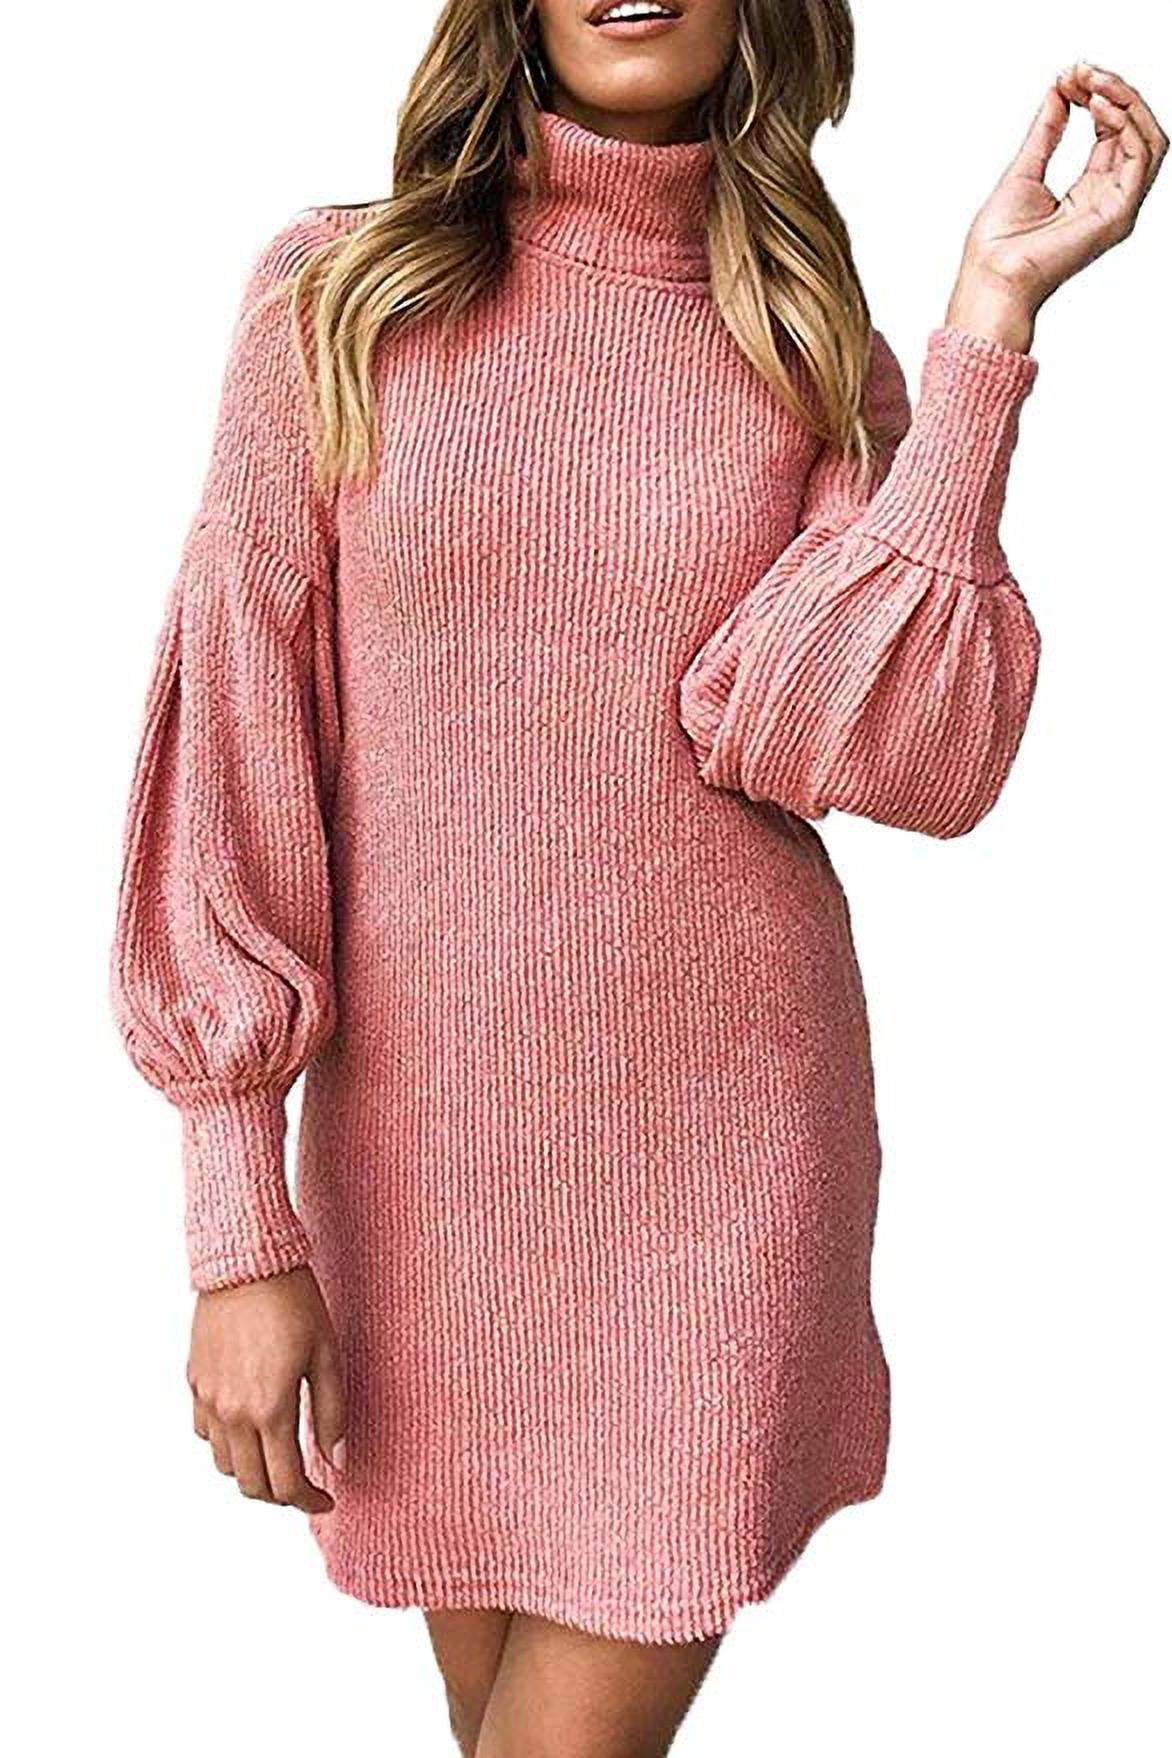 Women Turtleneck Ladies Long Puff Sleeves Casual Winter Sweater Mini Dress